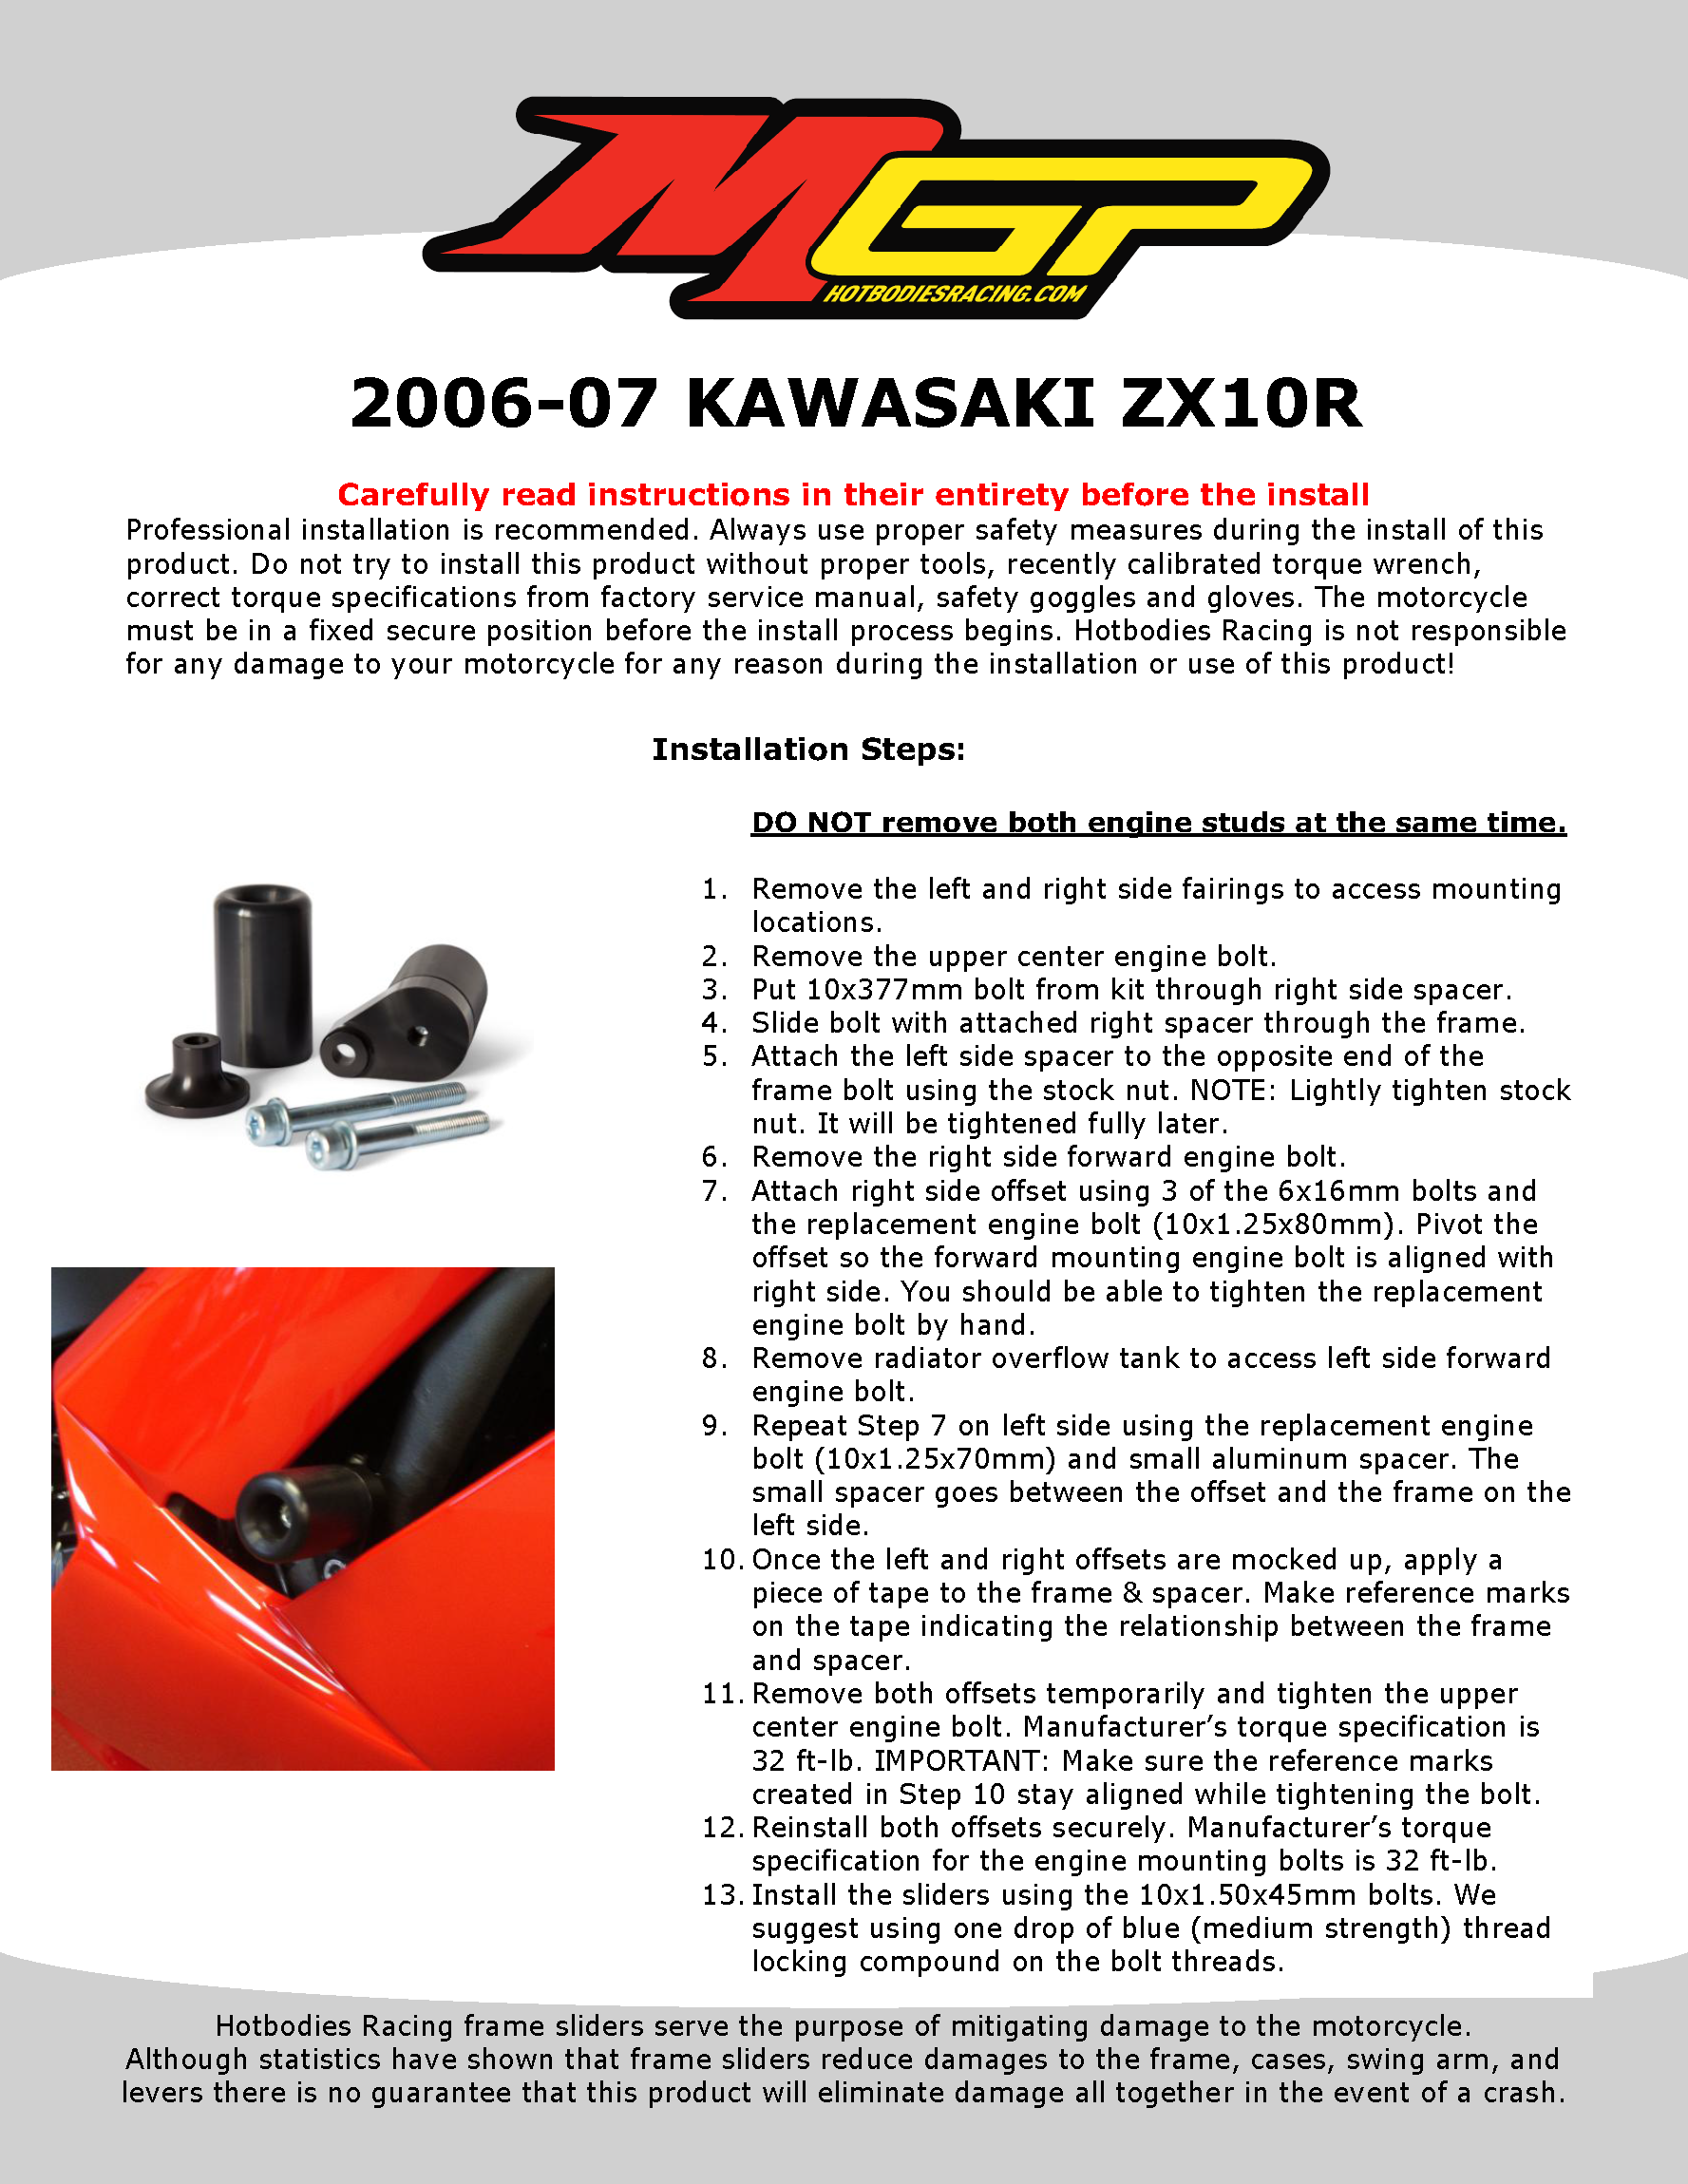 ZX10R 2006-07 Frame Sliders